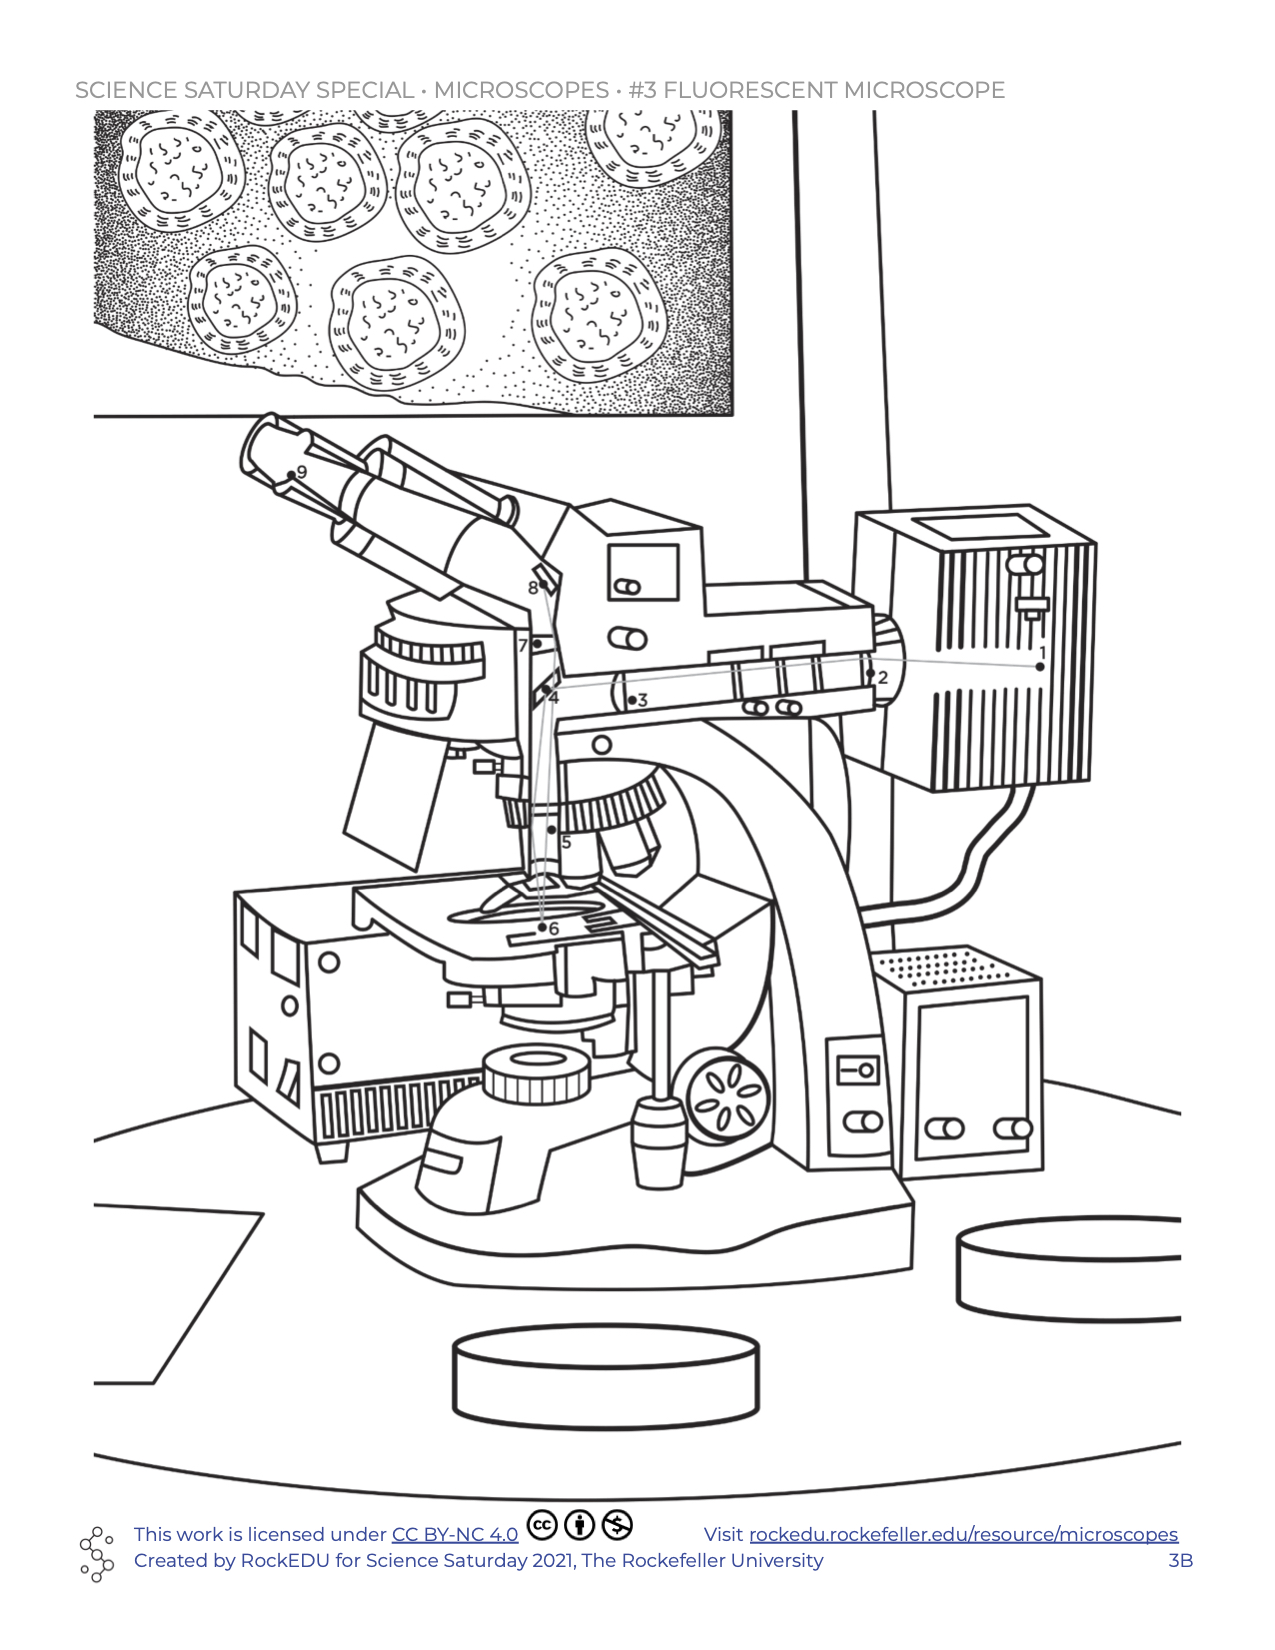 https://rockedu.rockefeller.edu/wp-content/uploads/2021/04/Microscope-Coloring-Fluorescent.jpg